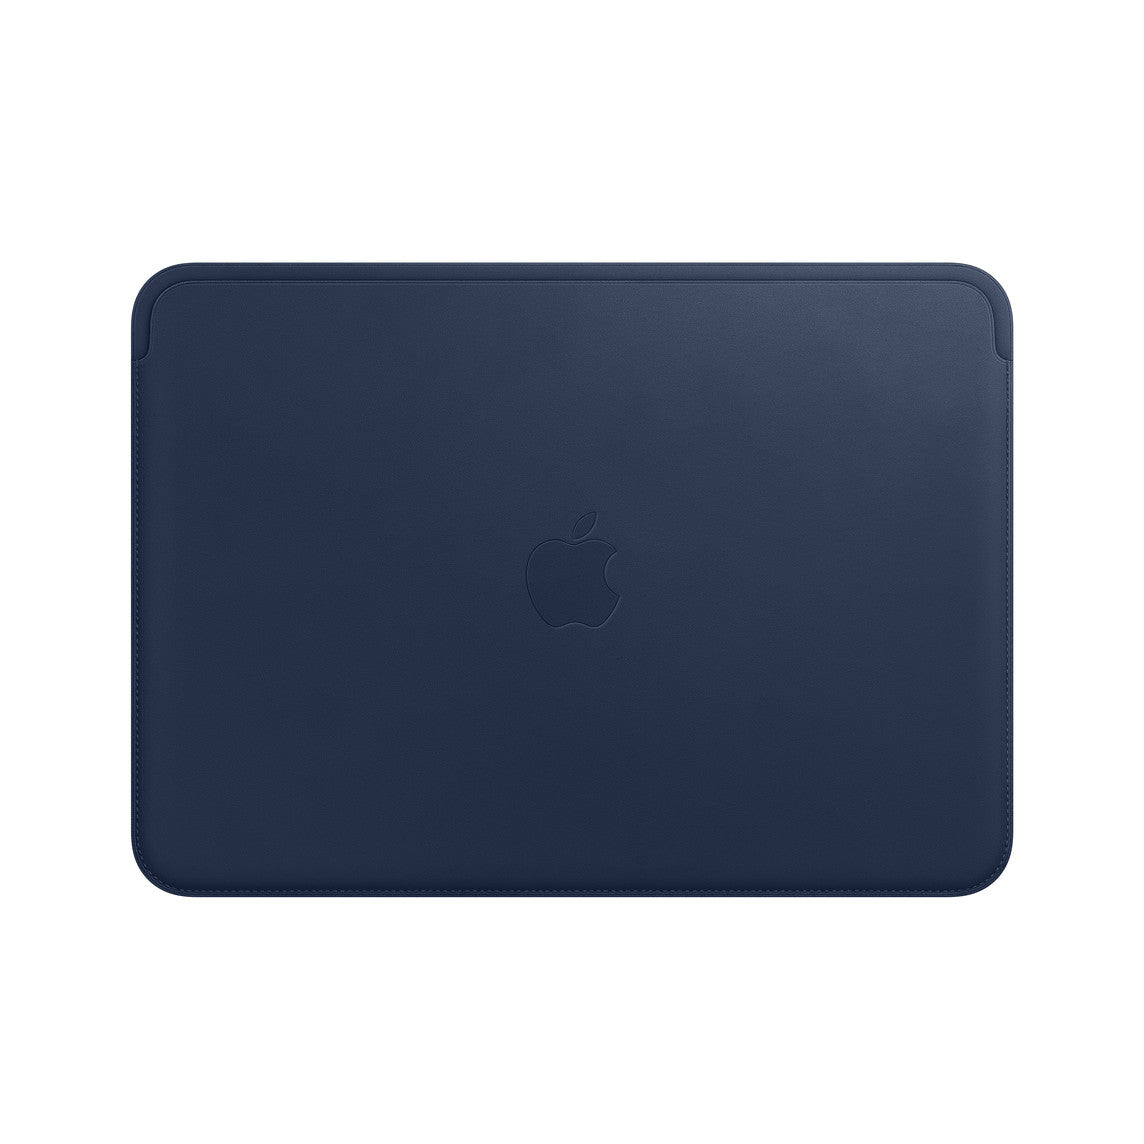 MacBook 12 Leather Sleeve Midnight Blue Midnight Blue New - Sealed